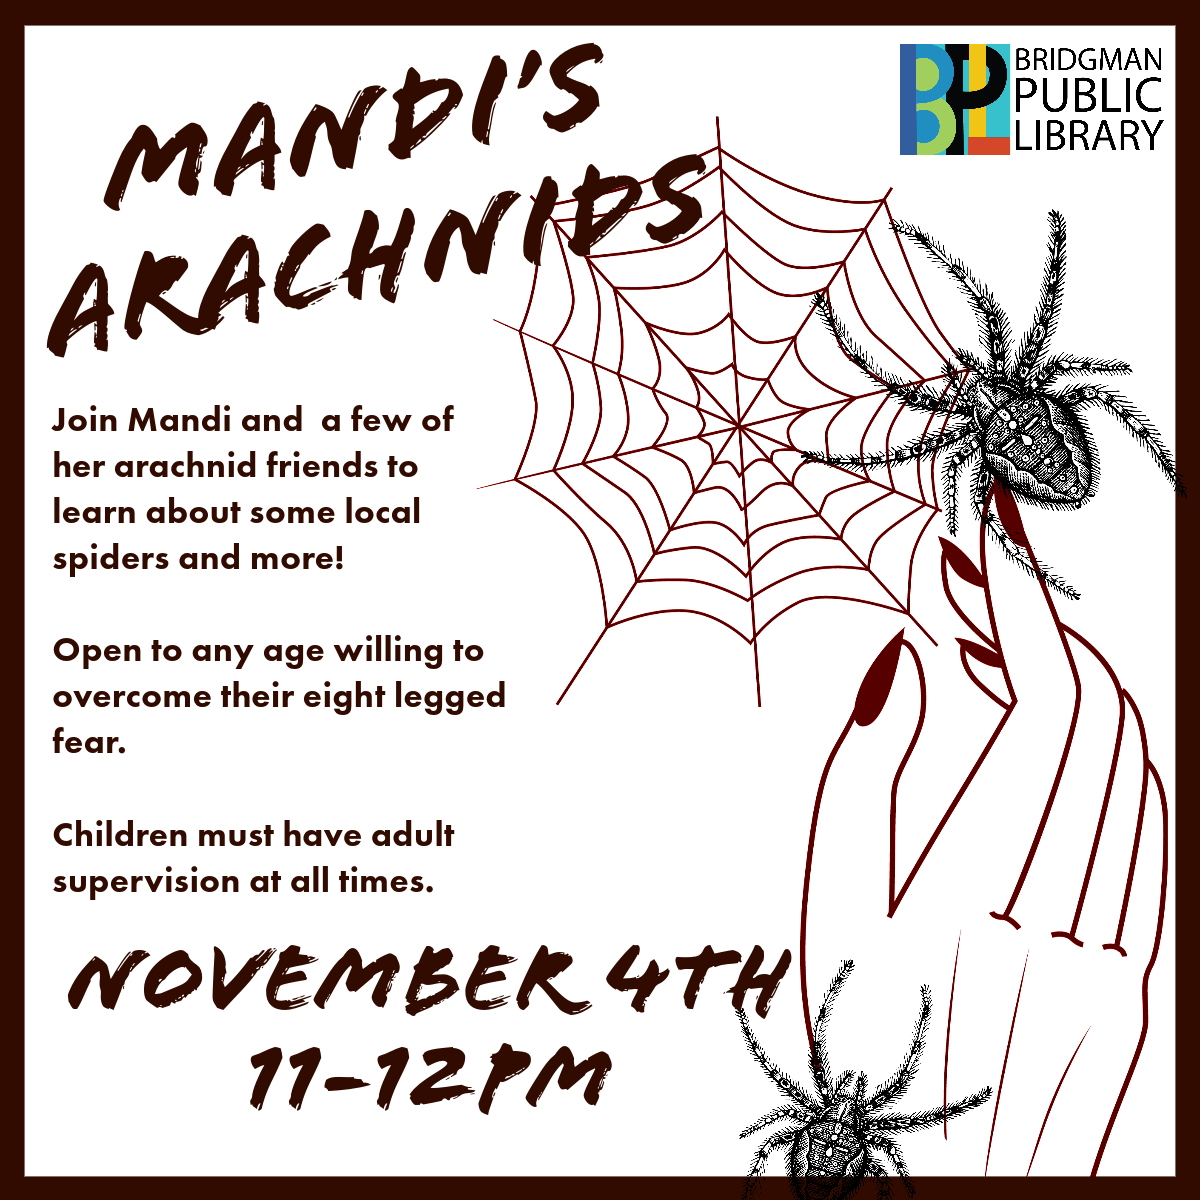 Register here for Mandi's Arachnids Program: Saturday, November 4th from 11-12pm.